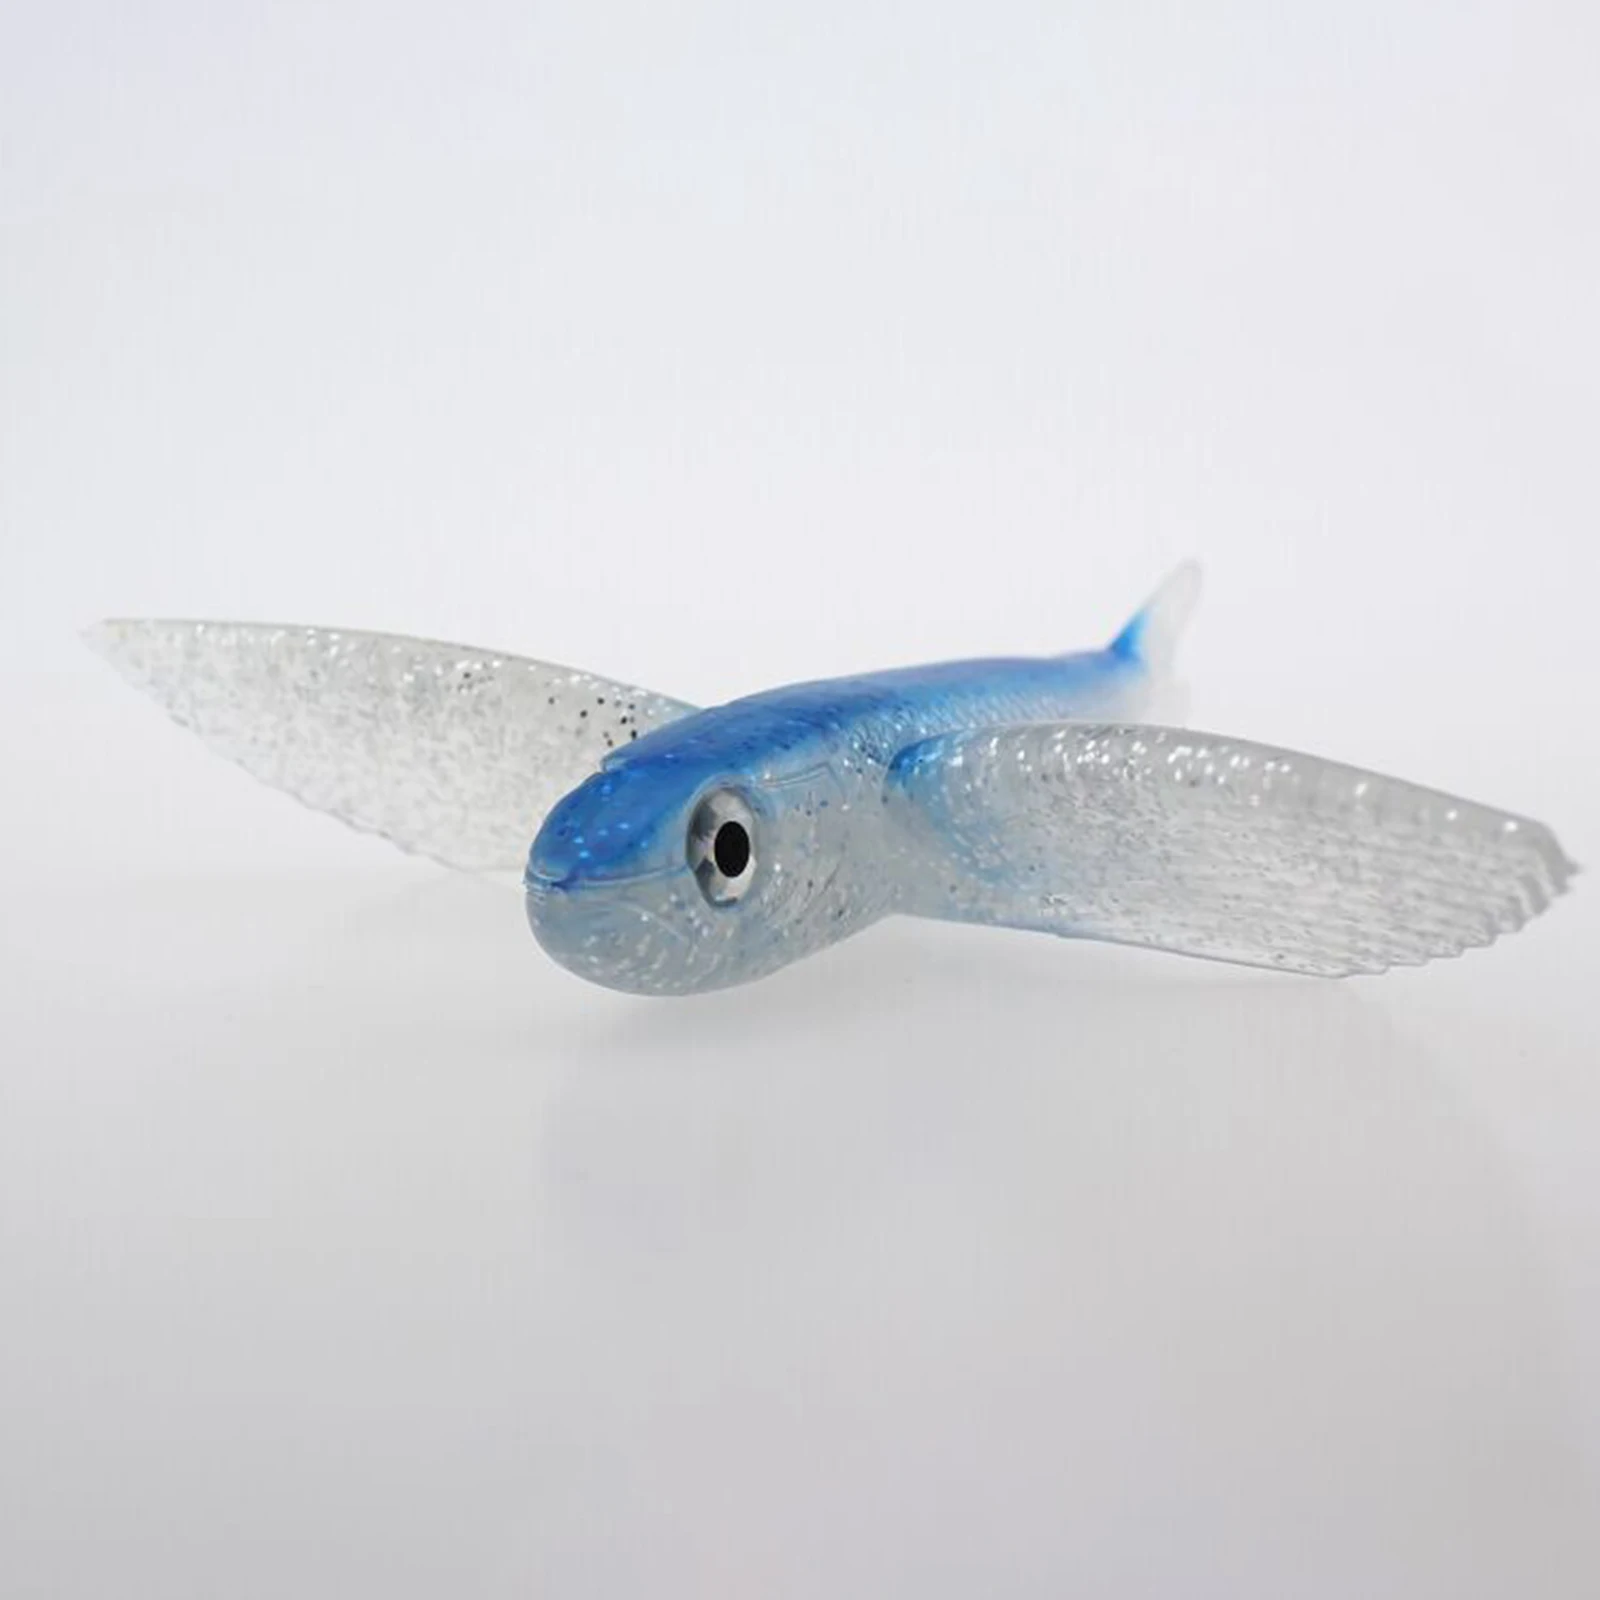 

Bionic Flying Fish Artificial Bait Soft Tuna Lure Seawater Fishing Lure For Kingfish/Tuna/Mackerel/Marlin/Mahi